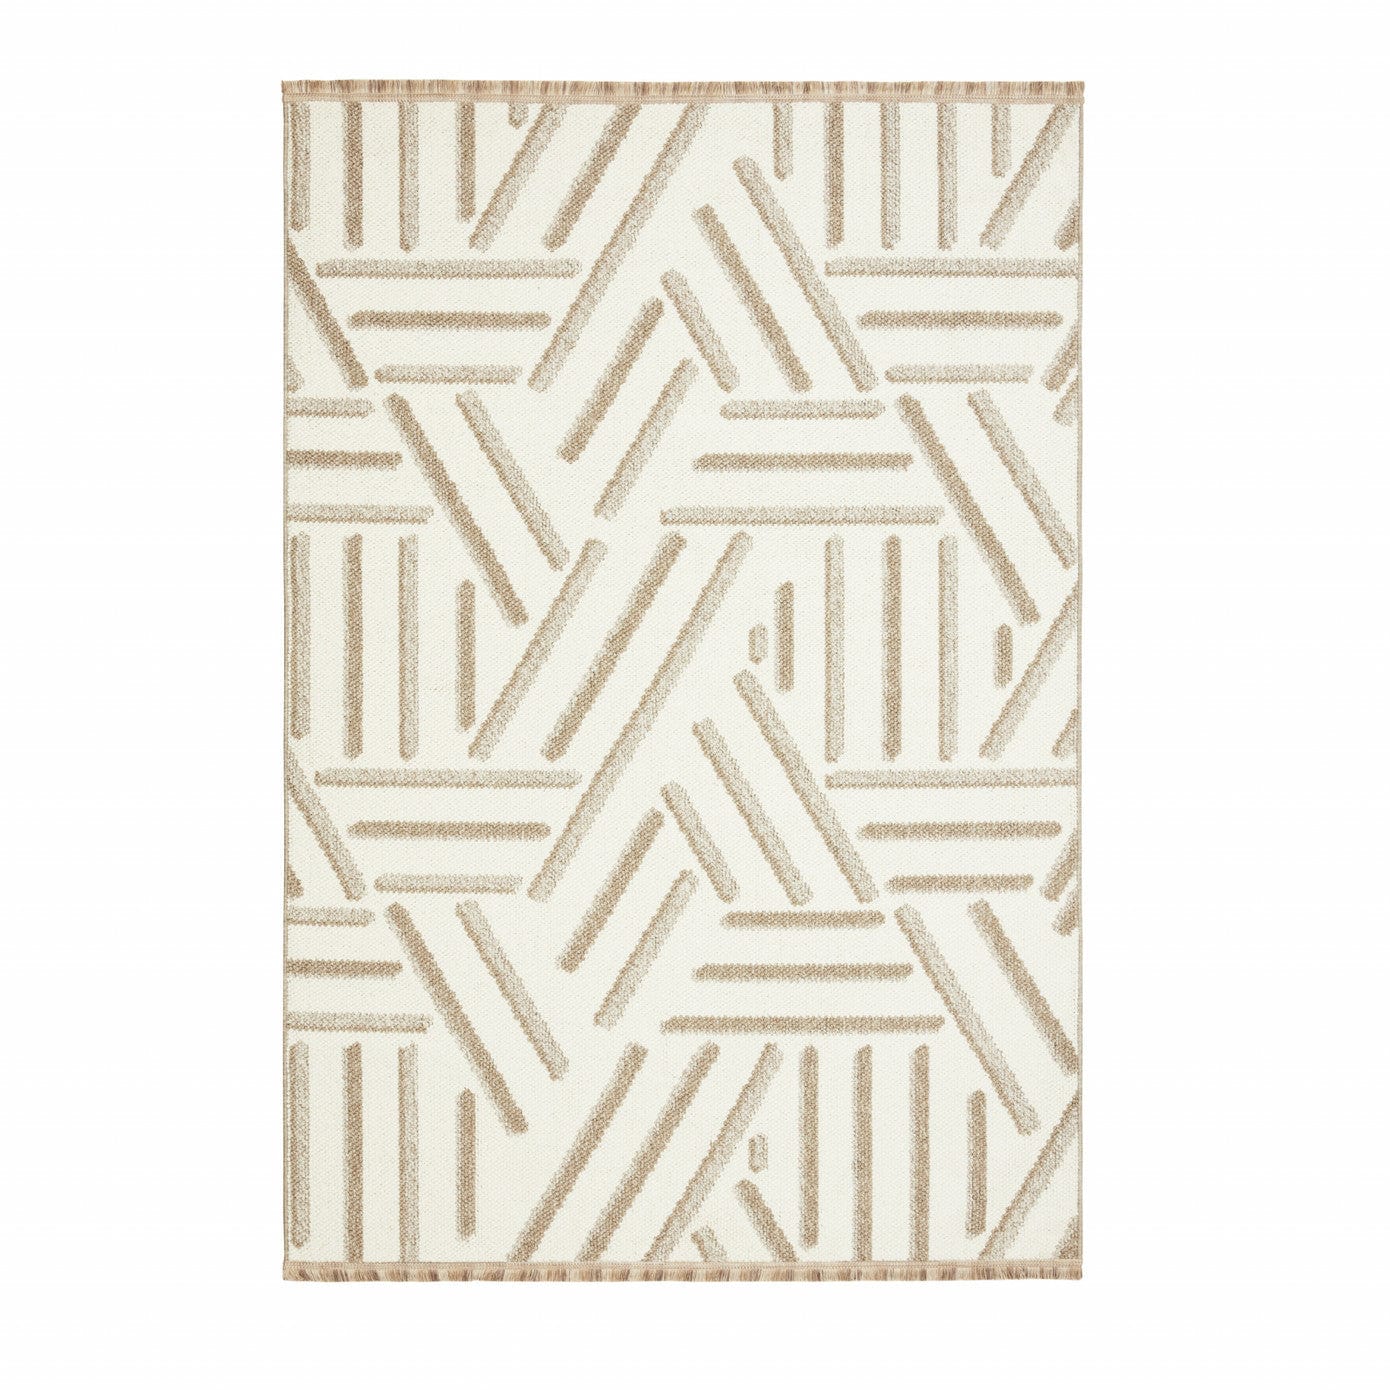 Kashmir Carpet 7/24 Scandinavian Elegance Napoli Beige 160x230 cm ZEFASH